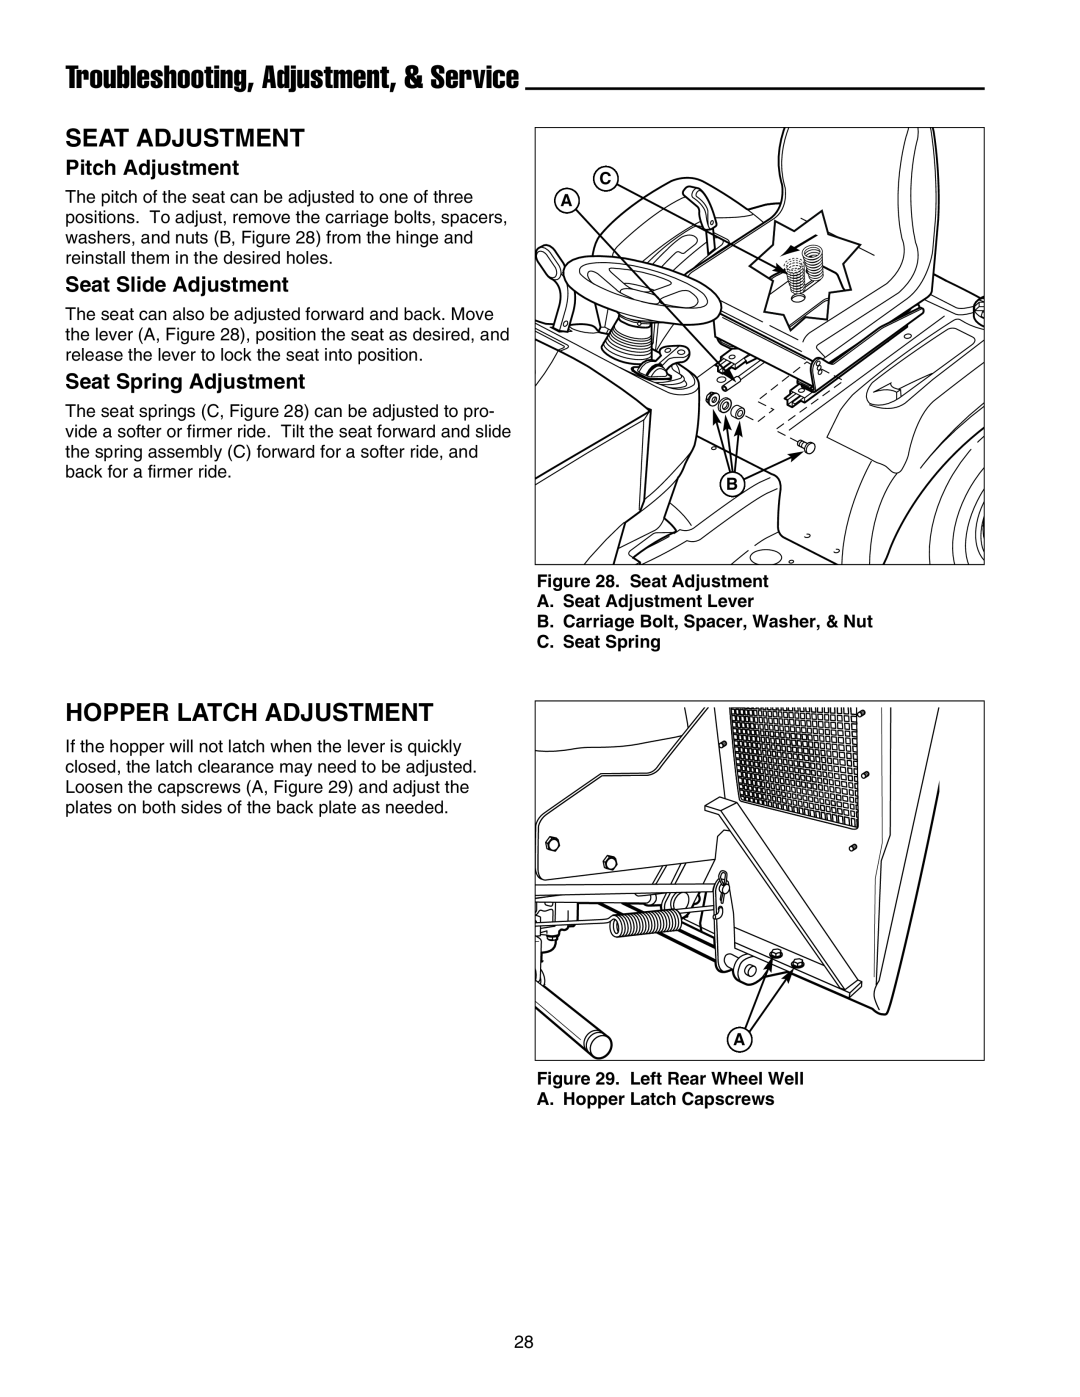 Snapper XL Series manual Seat Adjustment, Hopper Latch Adjustment, Troubleshooting, Adjustment, & Service 